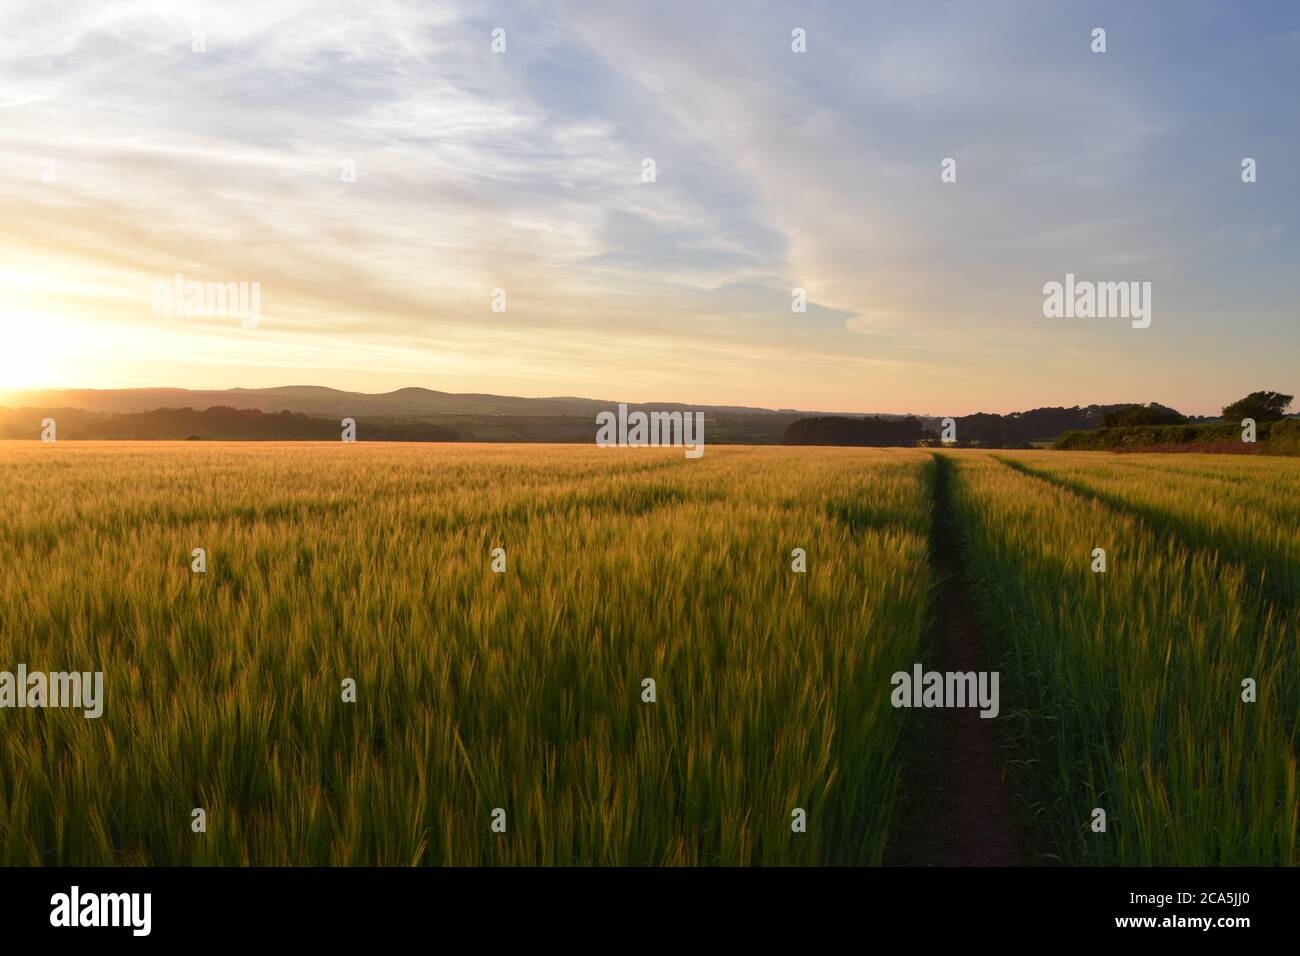 barley field at sunset Stock Photo